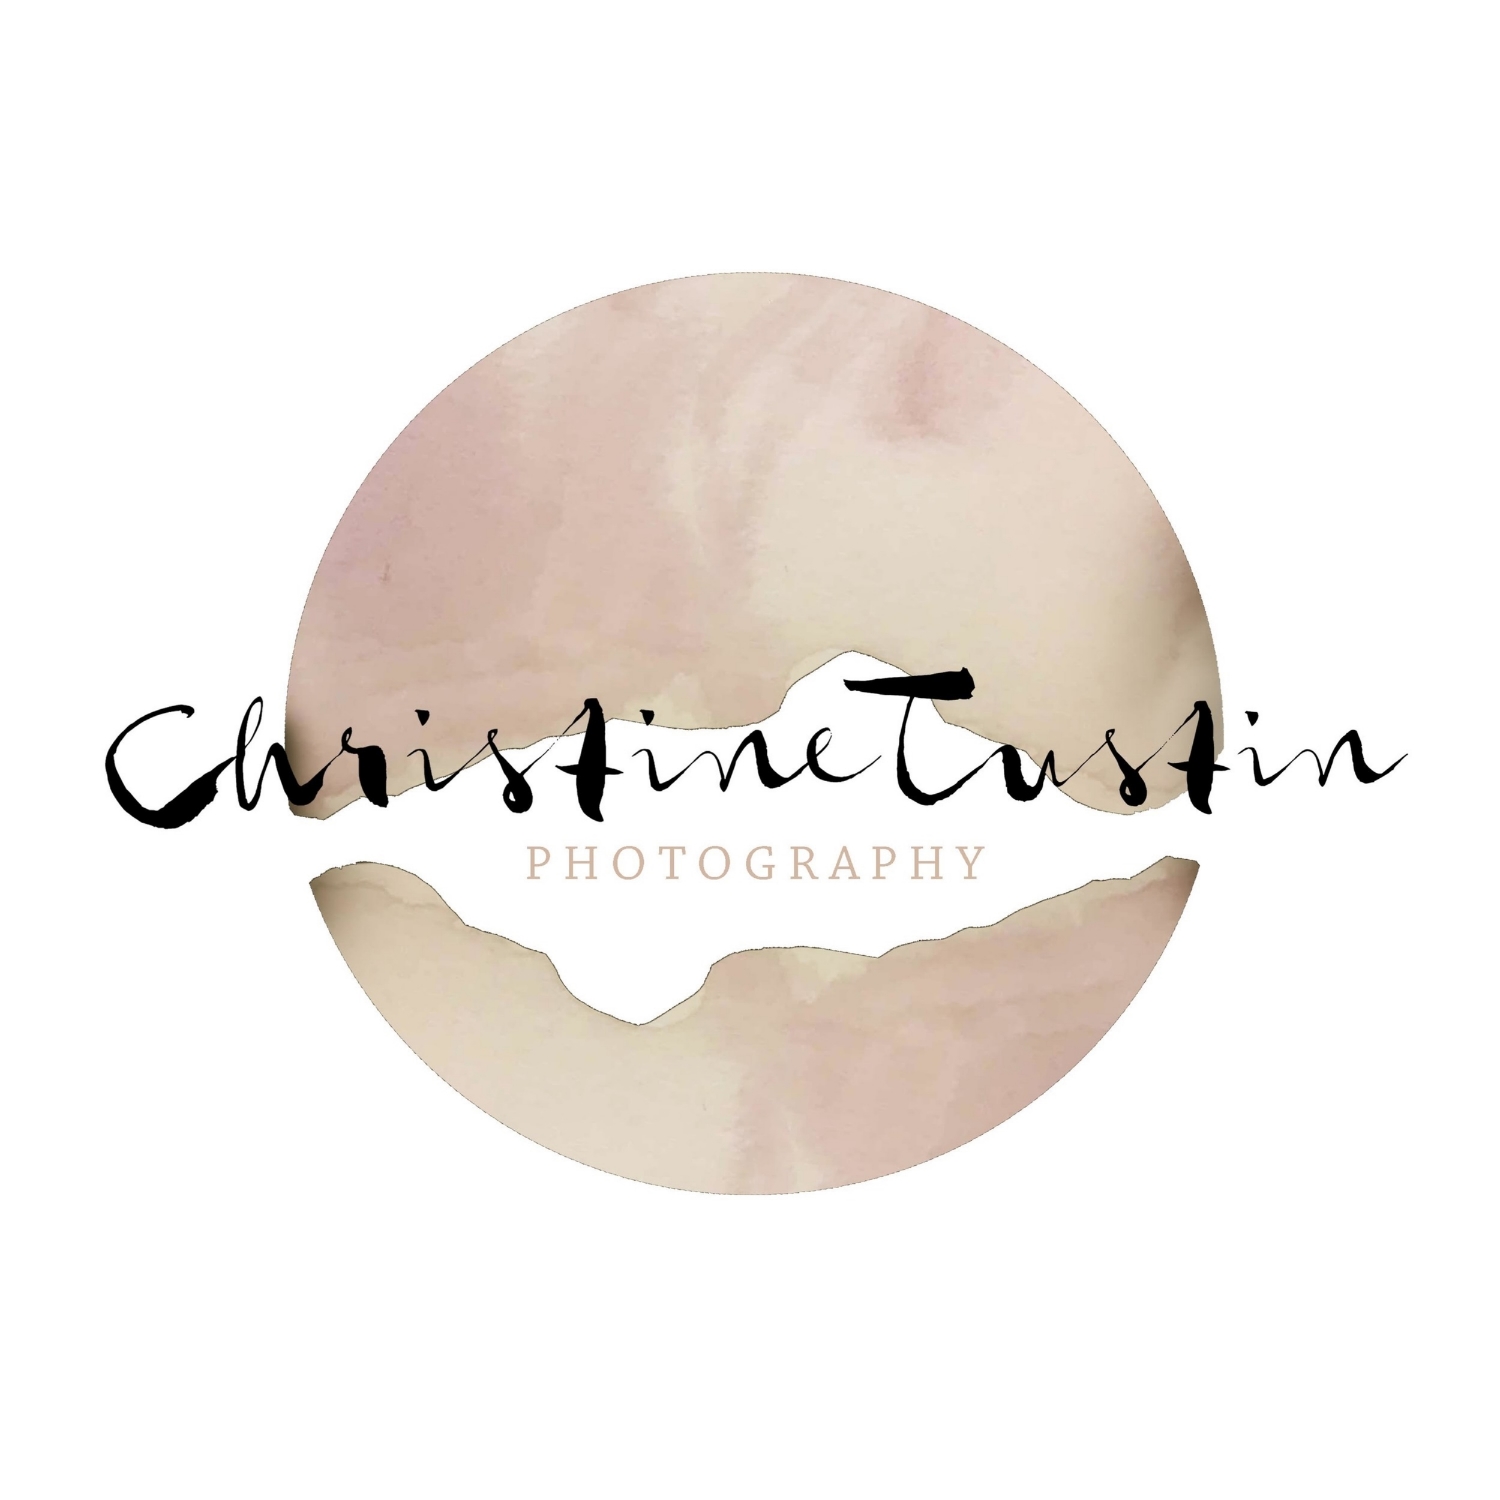 Christine Tustin Photography